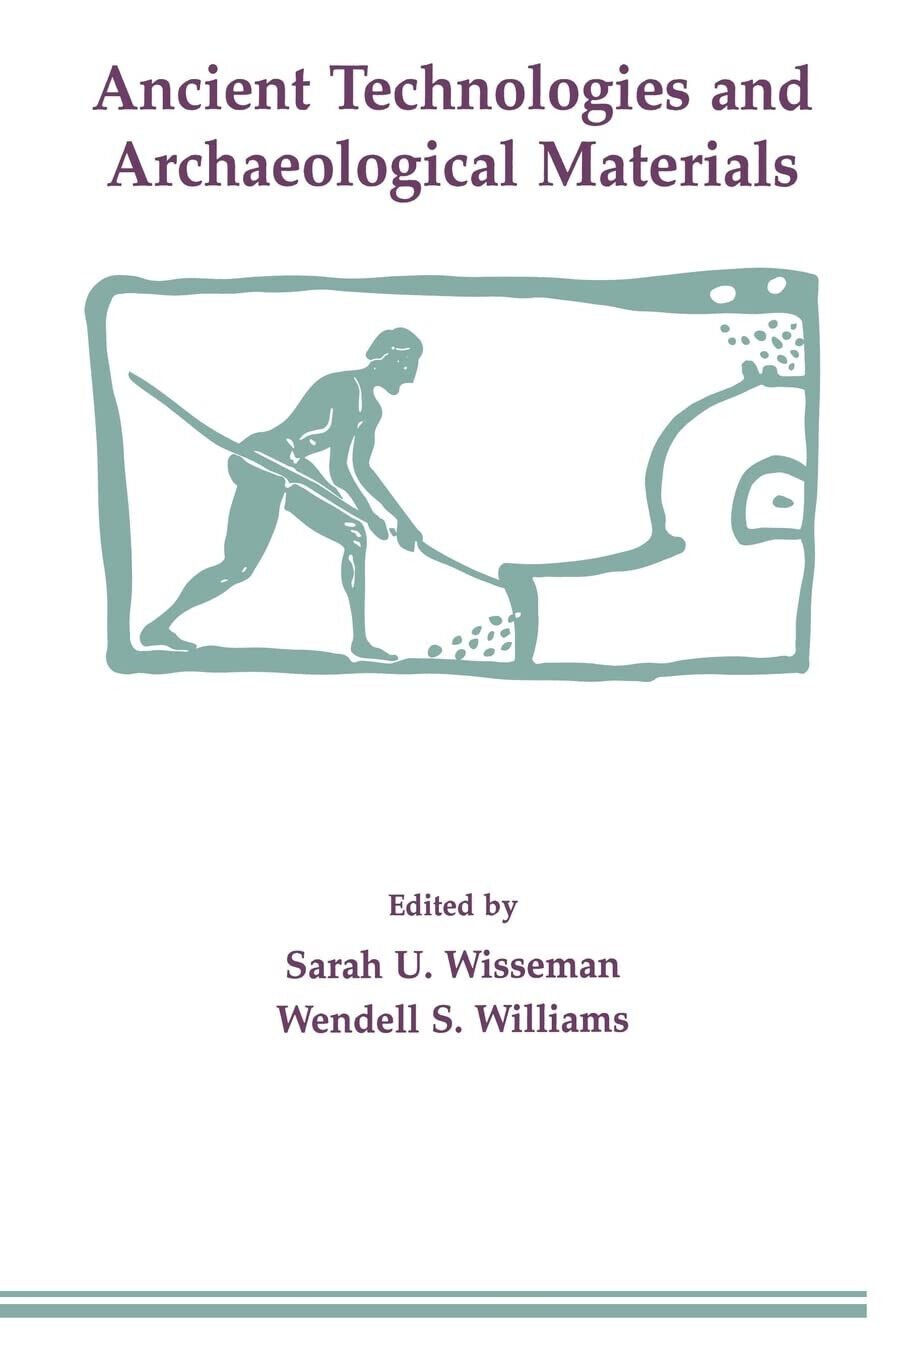 Ancient Technologies and Archaeological Materials - Sarah U. Wisseman - 2016